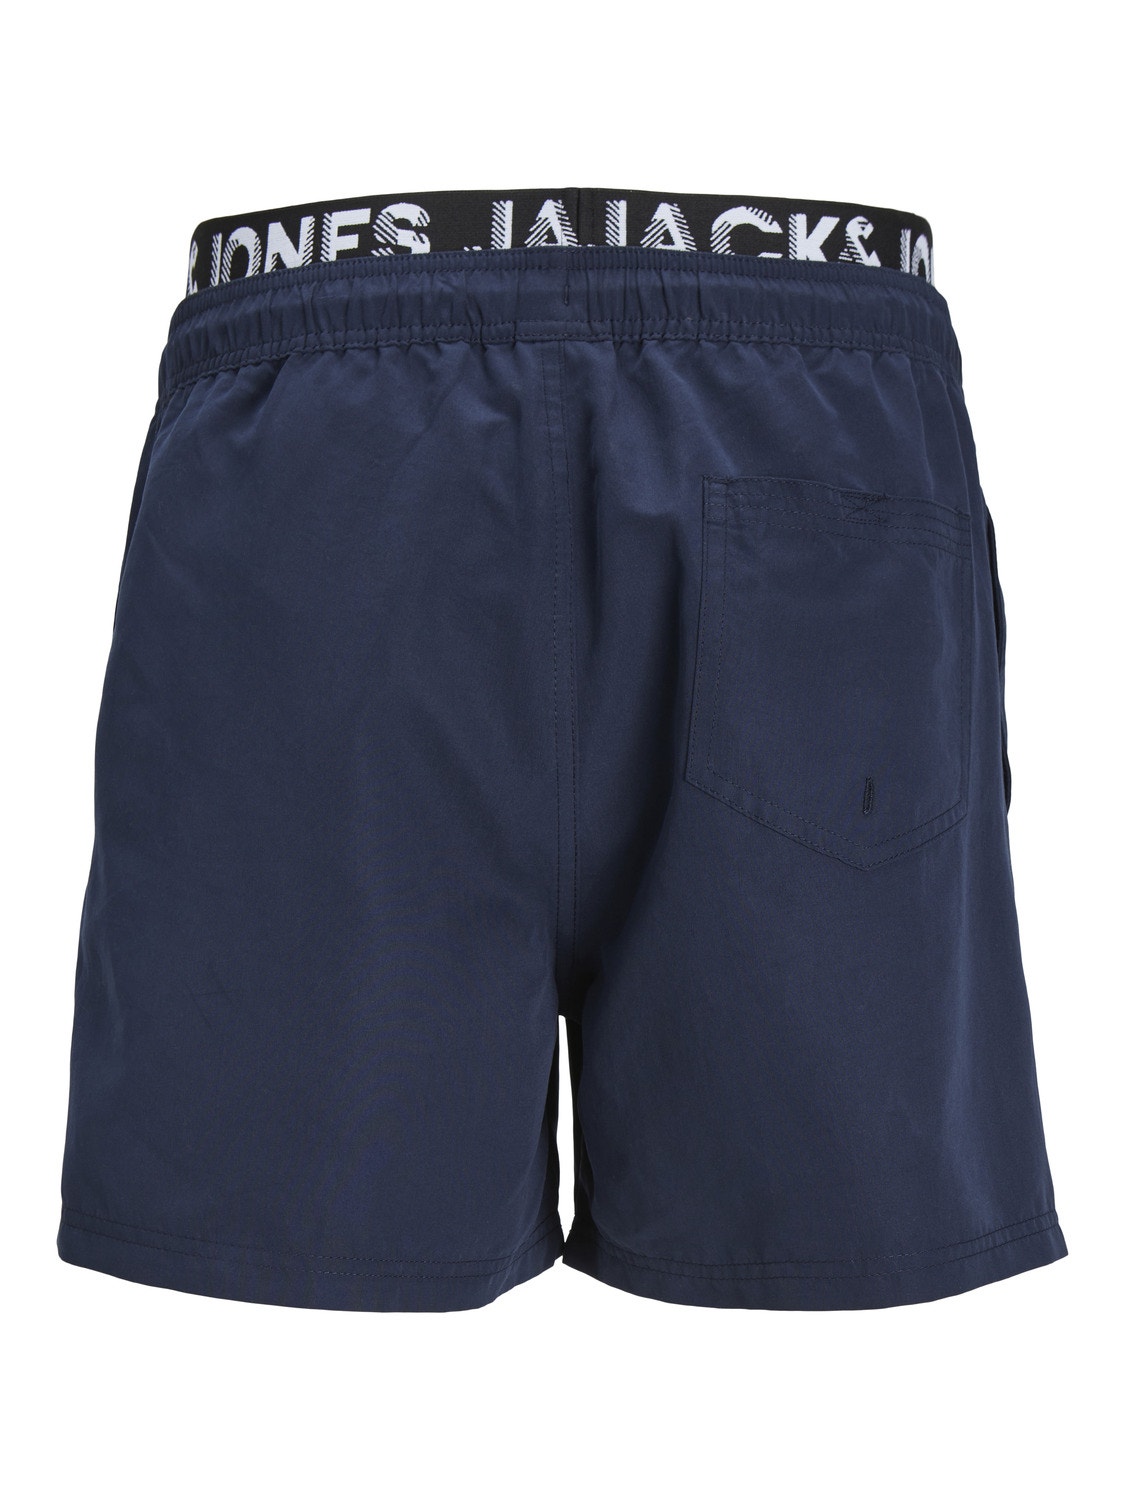 Jack & Jones Regular Fit Plaukimo šortai -Navy Blazer - 12227254